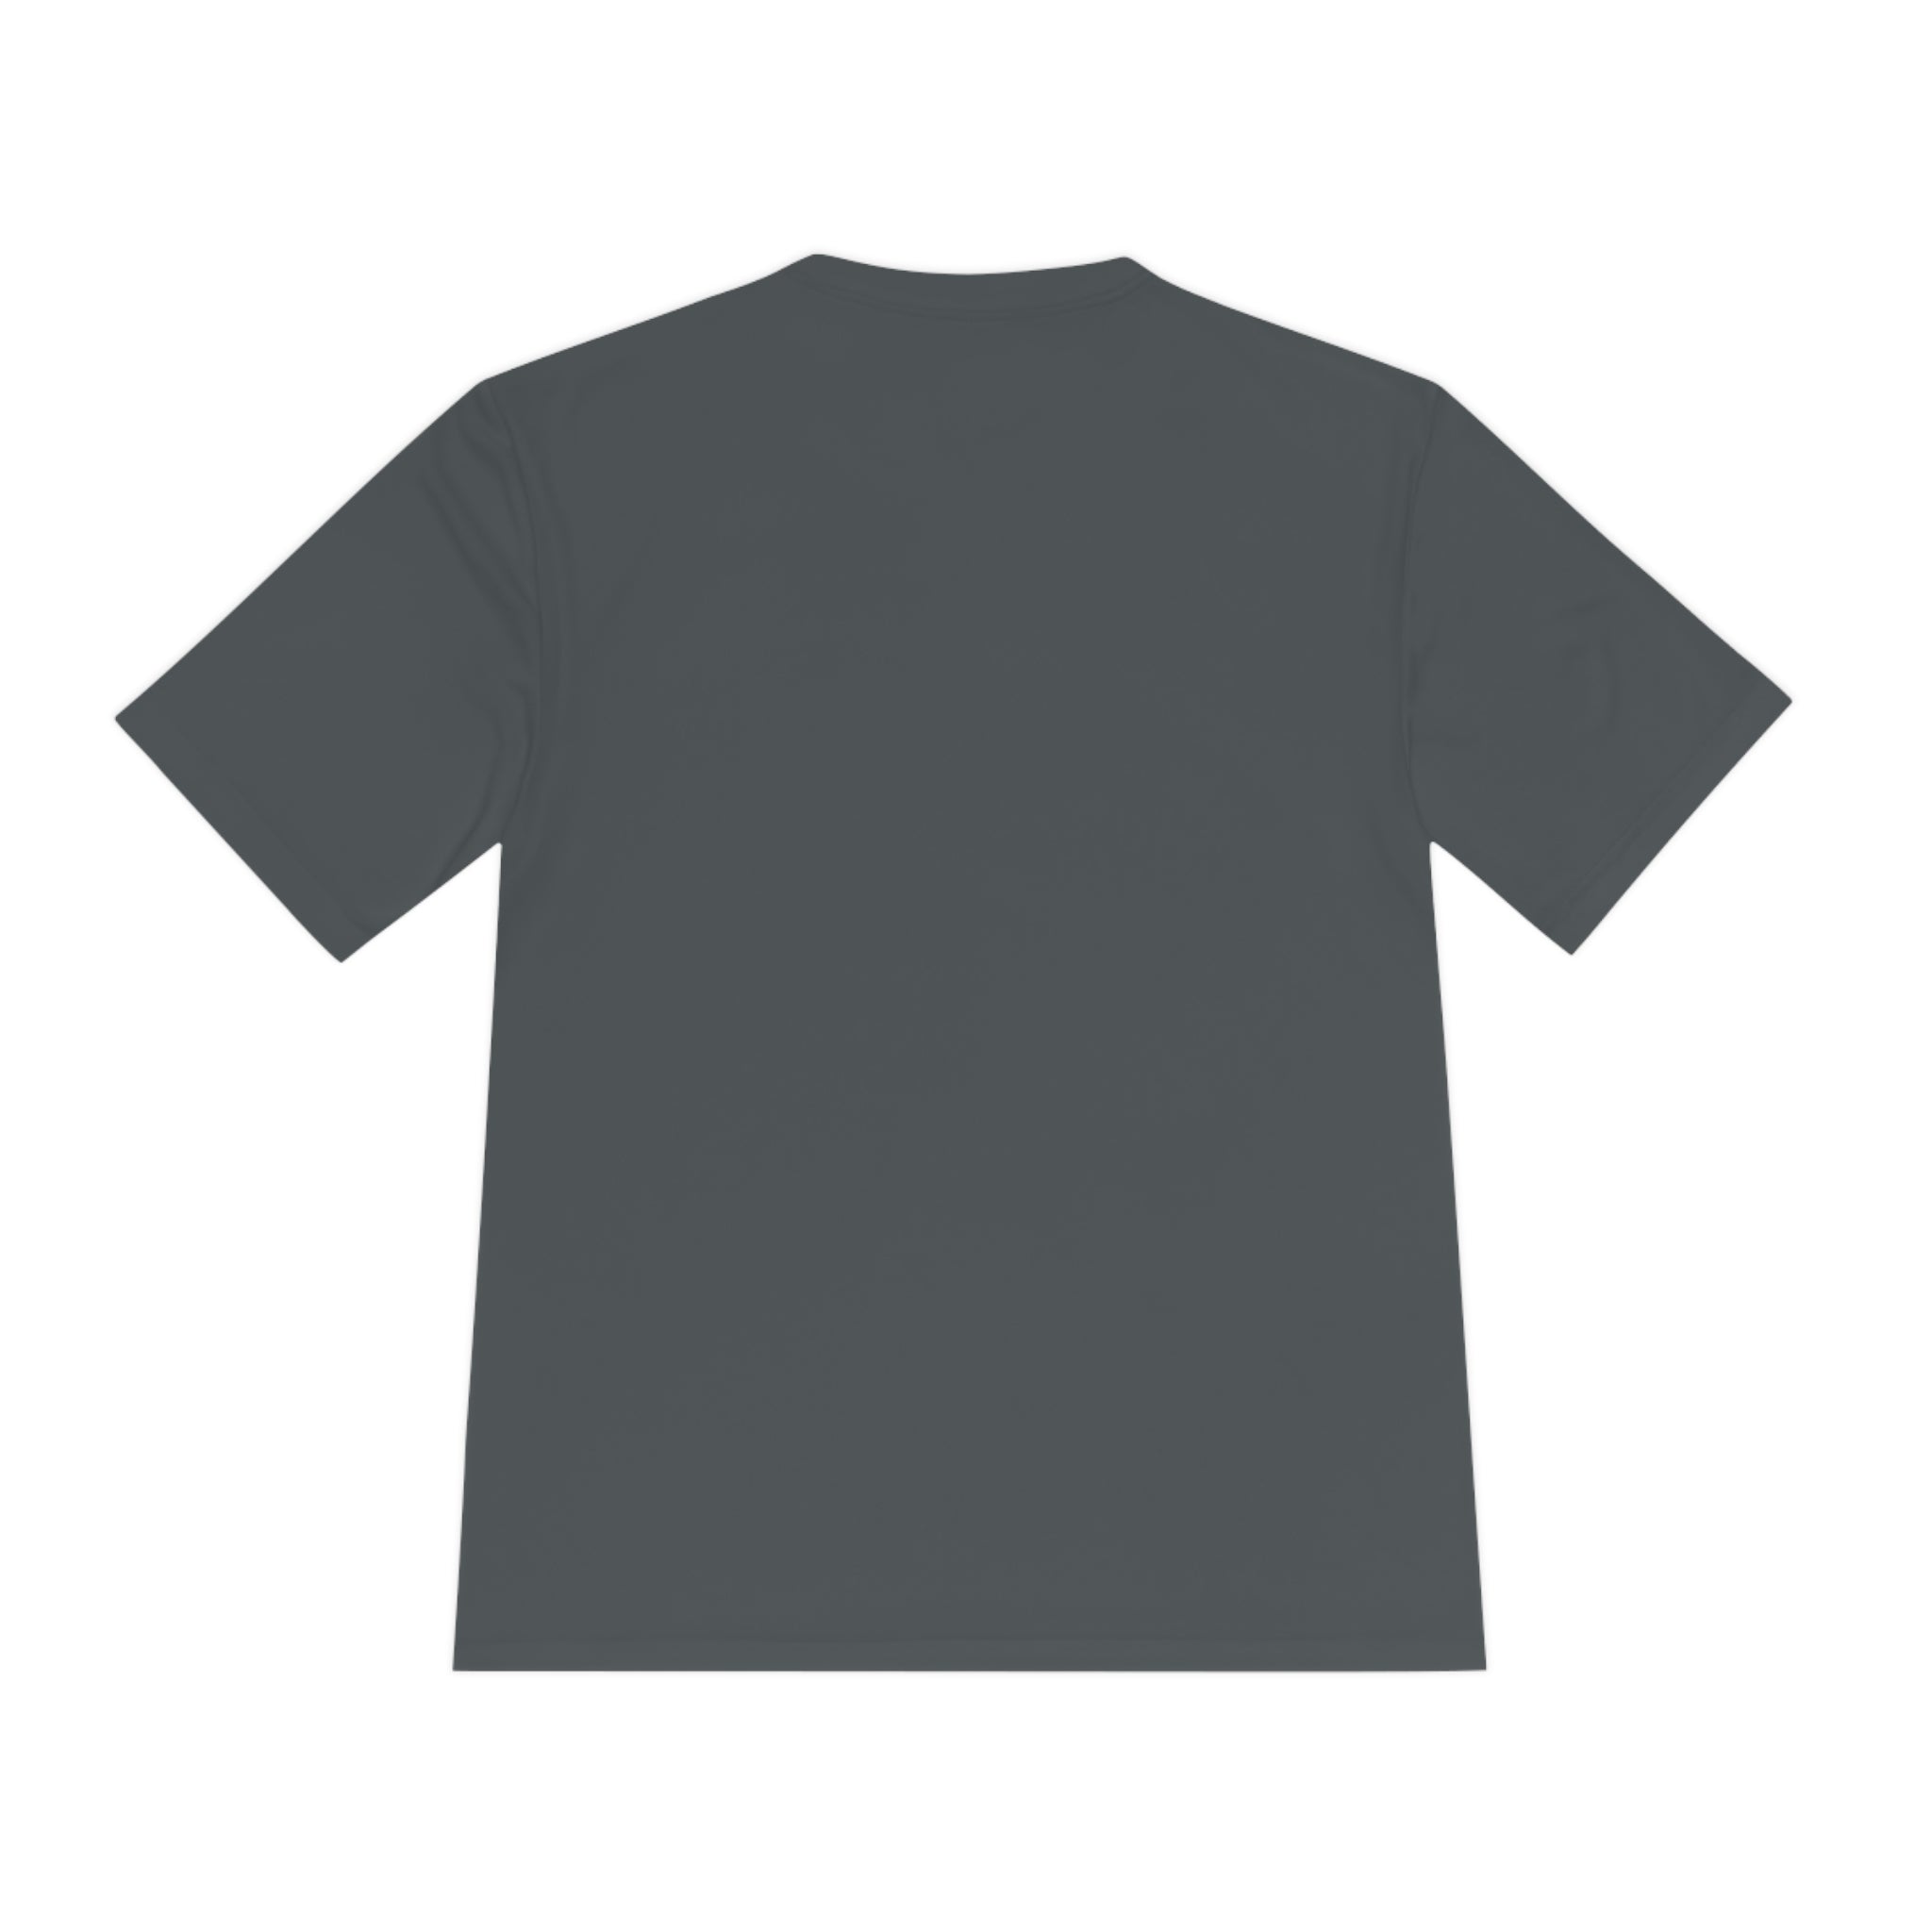 Unisex Printed T-Shirts